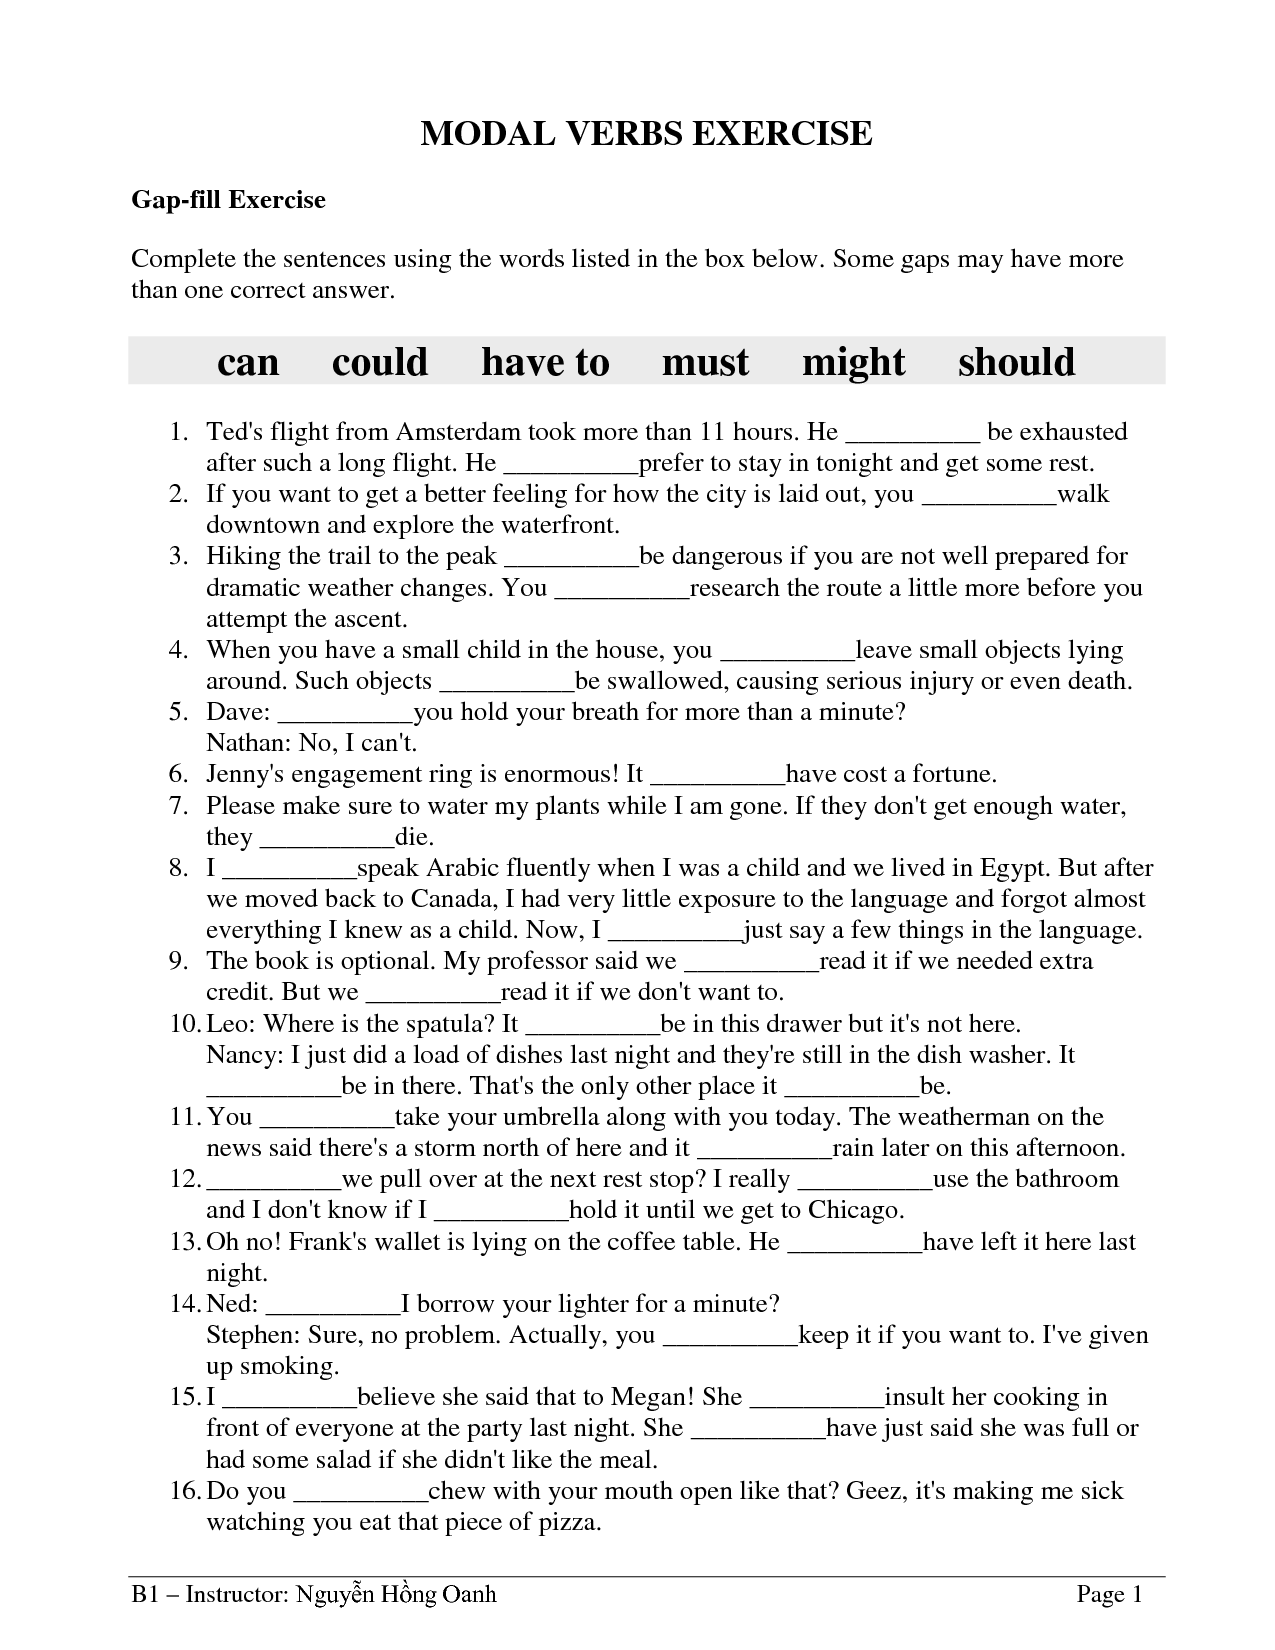 modal-verbs-1-modal-verbs-english-grammar-worksheets-modals-verbs